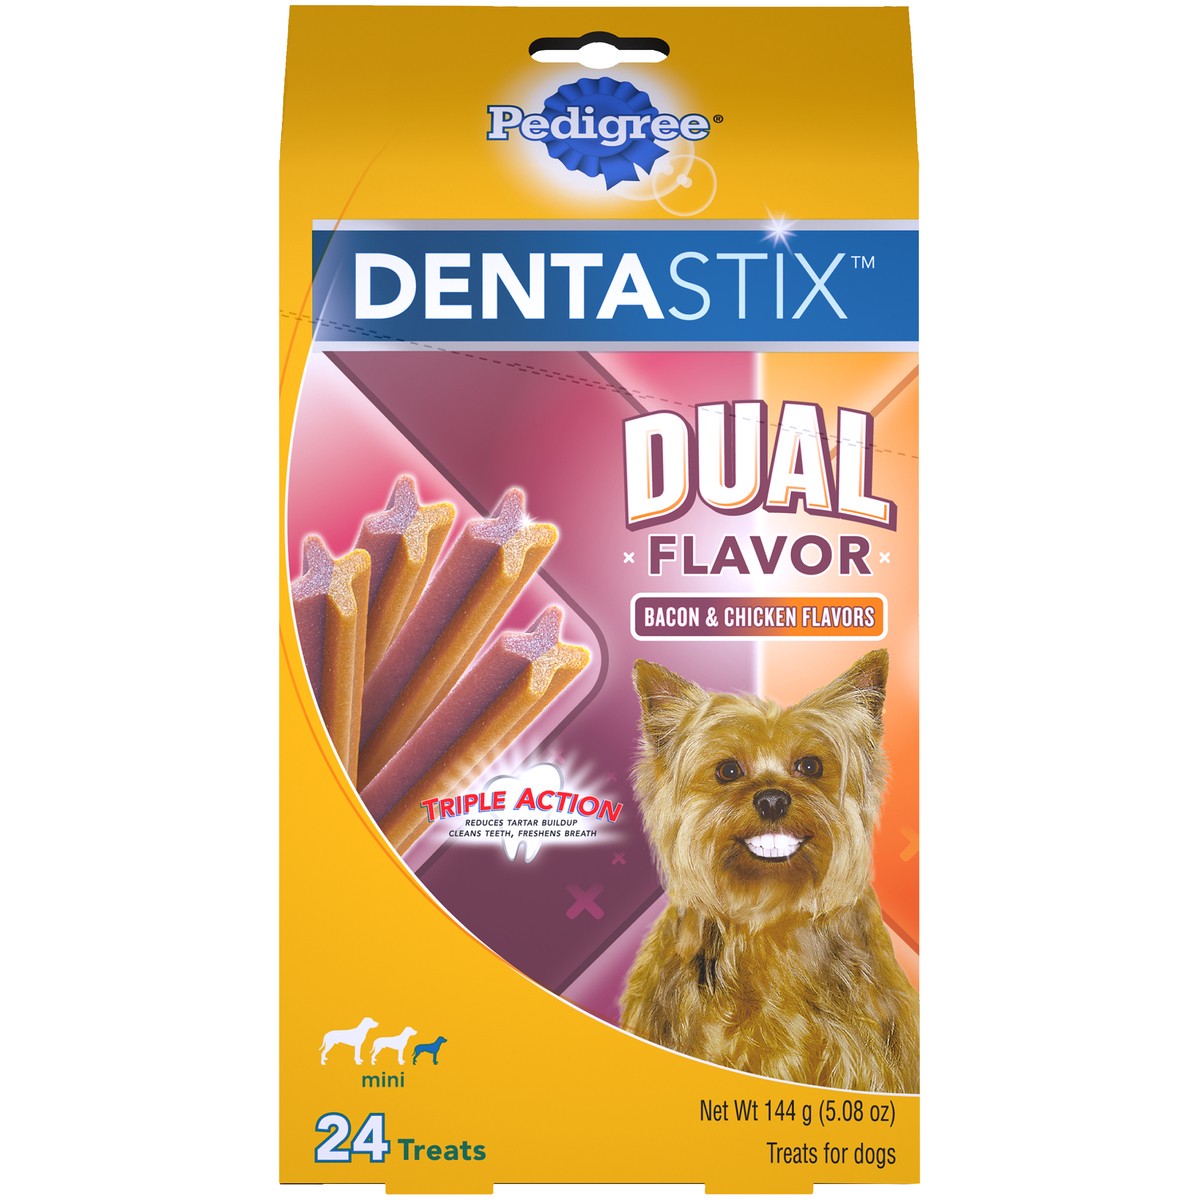 slide 1 of 14, Pedigree Dentastix Dual Flavor Bacon & Chicken Flavors Mini Treats for Dogs 5.08 oz. Box, 5.08 oz